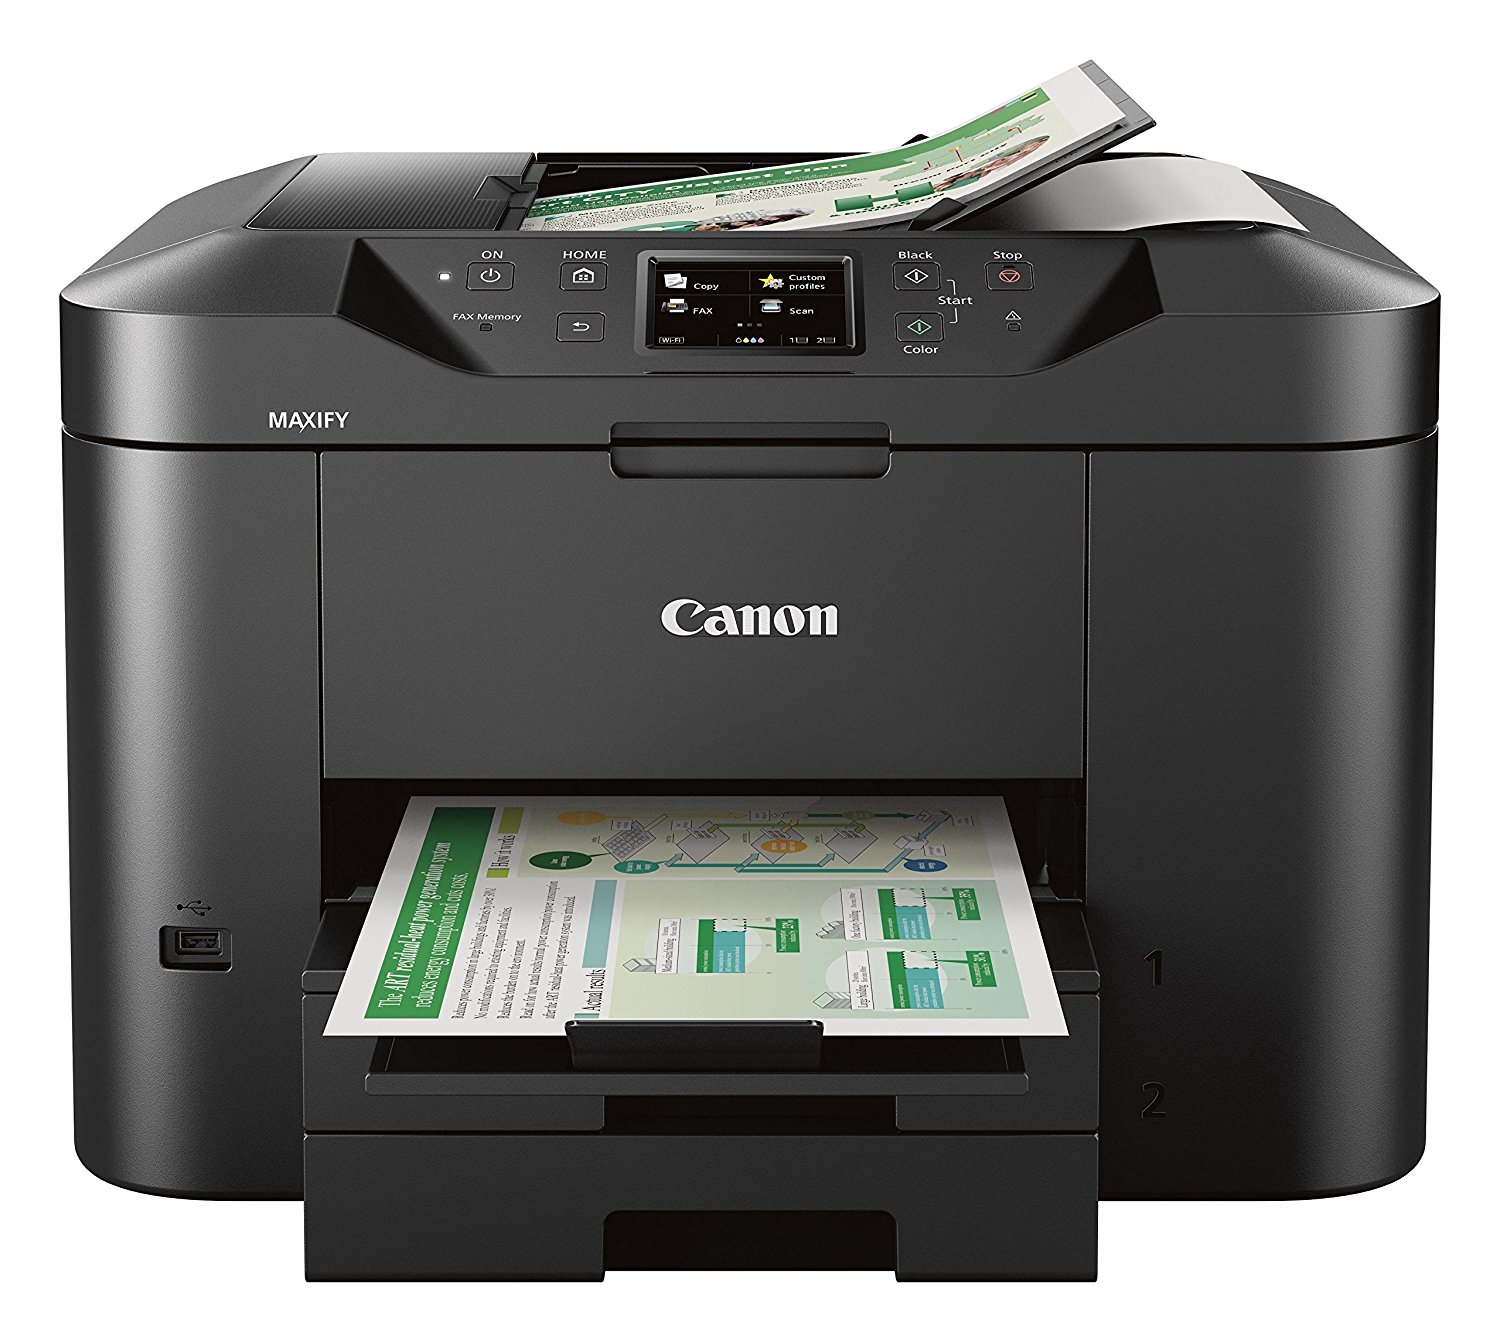 Canon Printer Black Ink Issue Canon Printer Not Priting Black